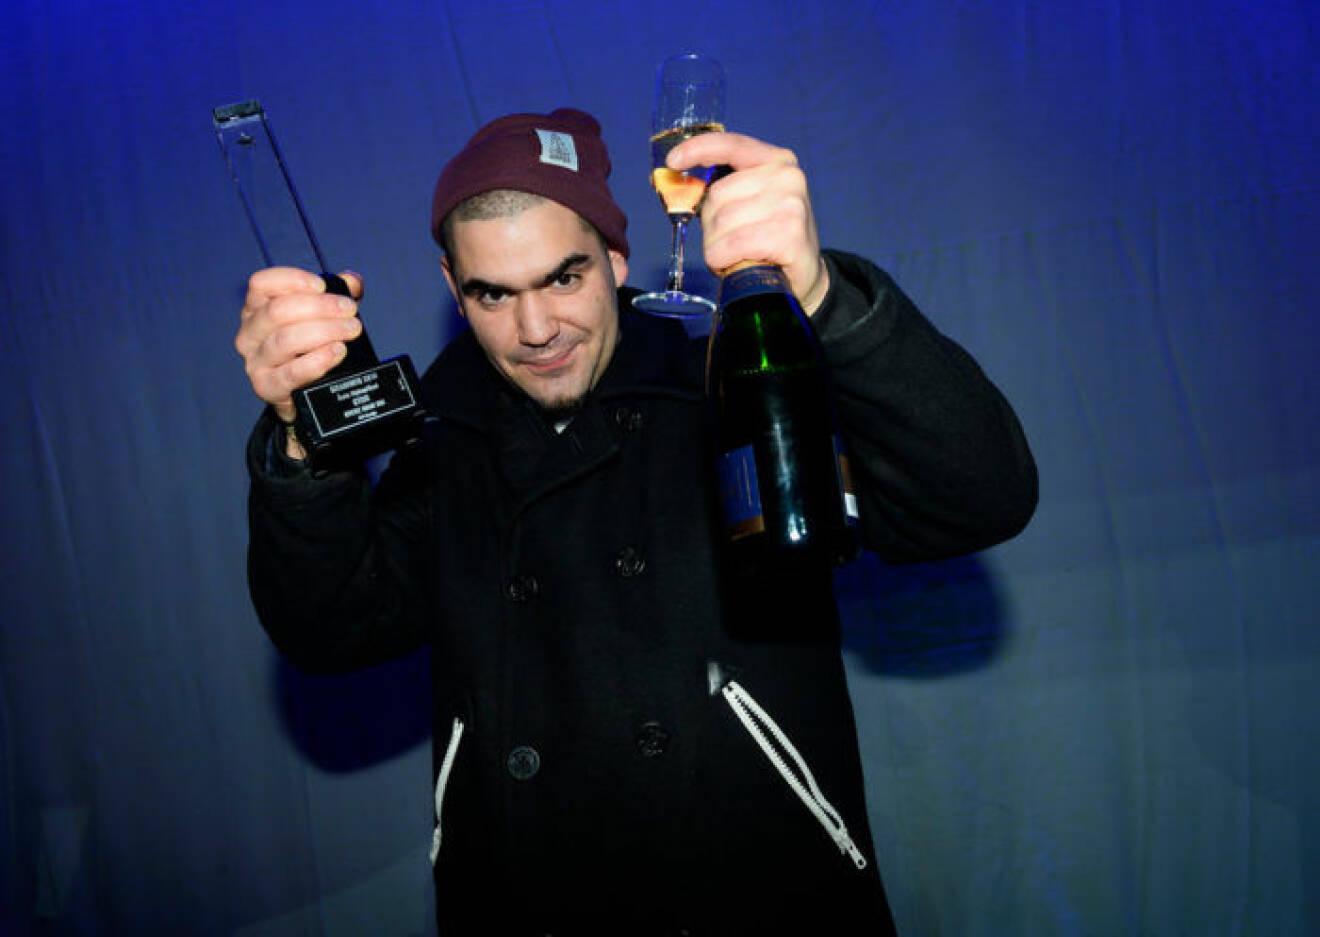 Rapparen Stor med en grammis och ett glas champagne i sin hand.